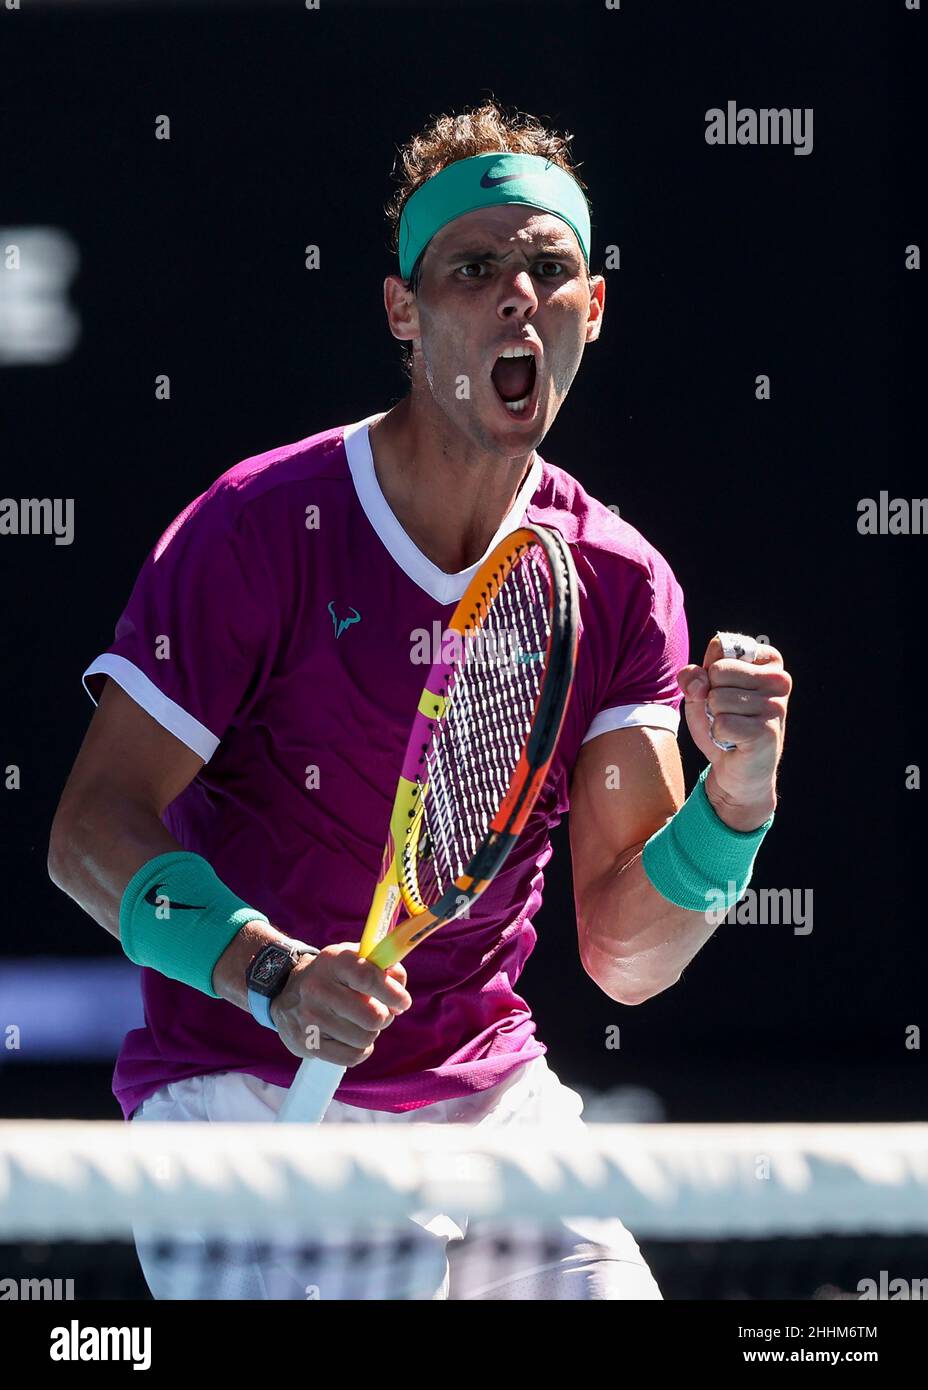 Melbourne, Australien. 25th. Januar 2022. Der spanische Tennisspieler Rafael Nadal feiert während des Australian Open Turniers am Dienstag, den 25January 2022. © Jürgen Hasenkopf / Alamy Live News Stockfoto